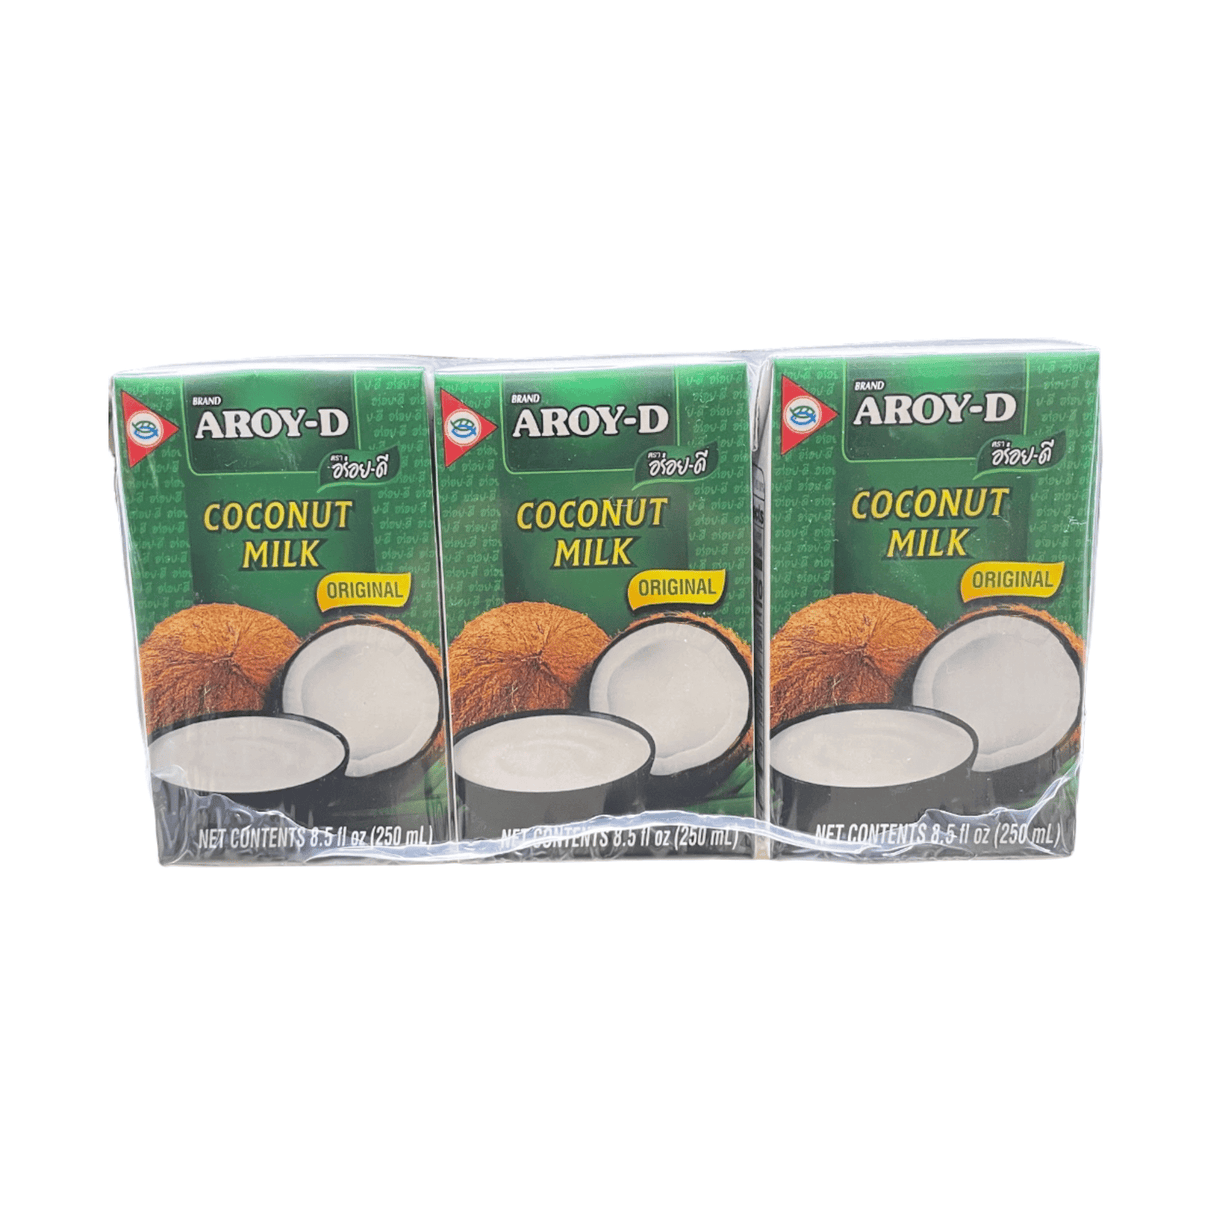 Aroy-d Coconut Milk Original